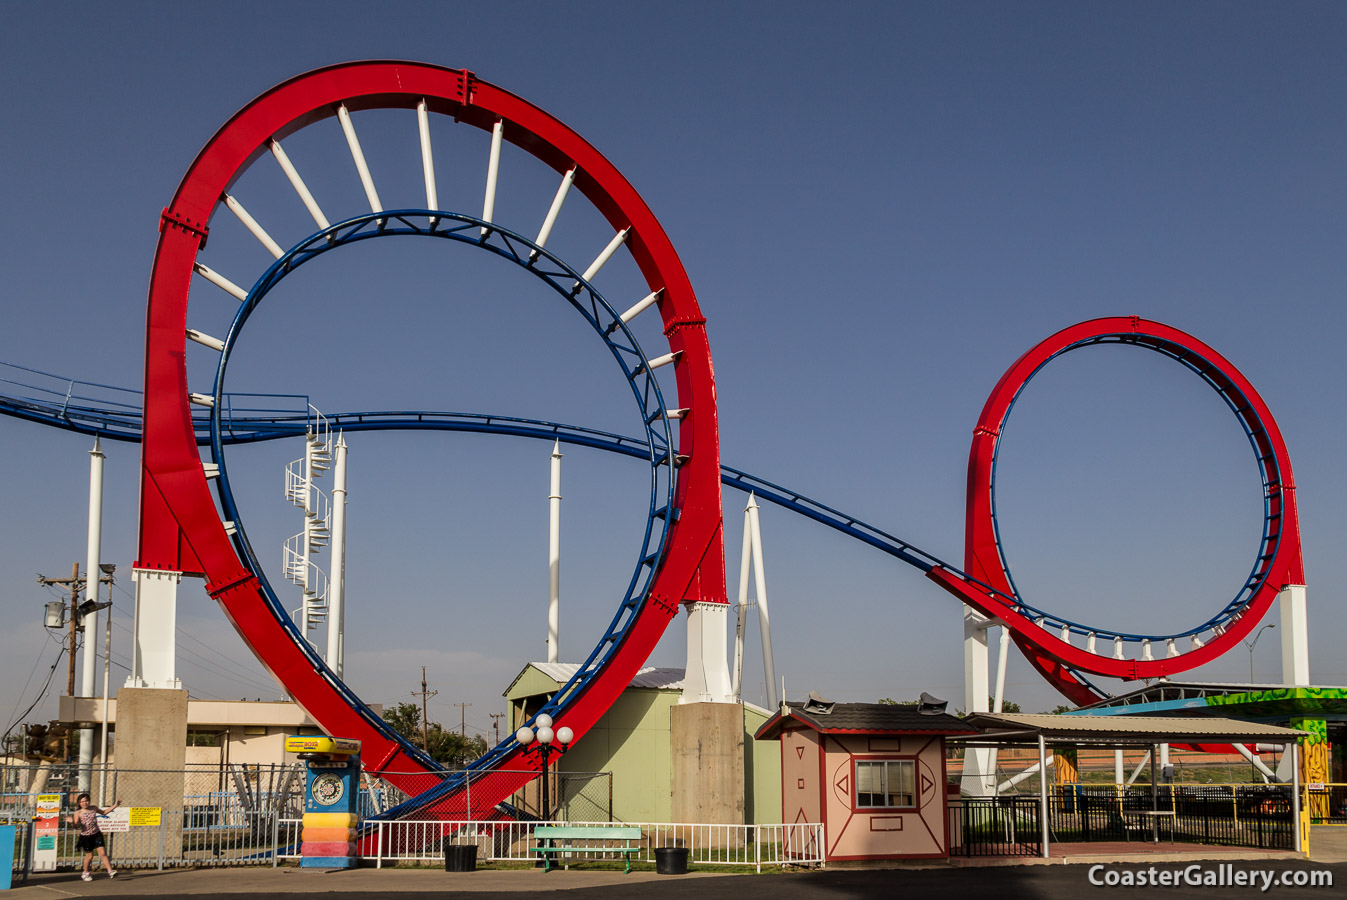 Modifications of the Texas Tornado looping coaster at Wonderland Park